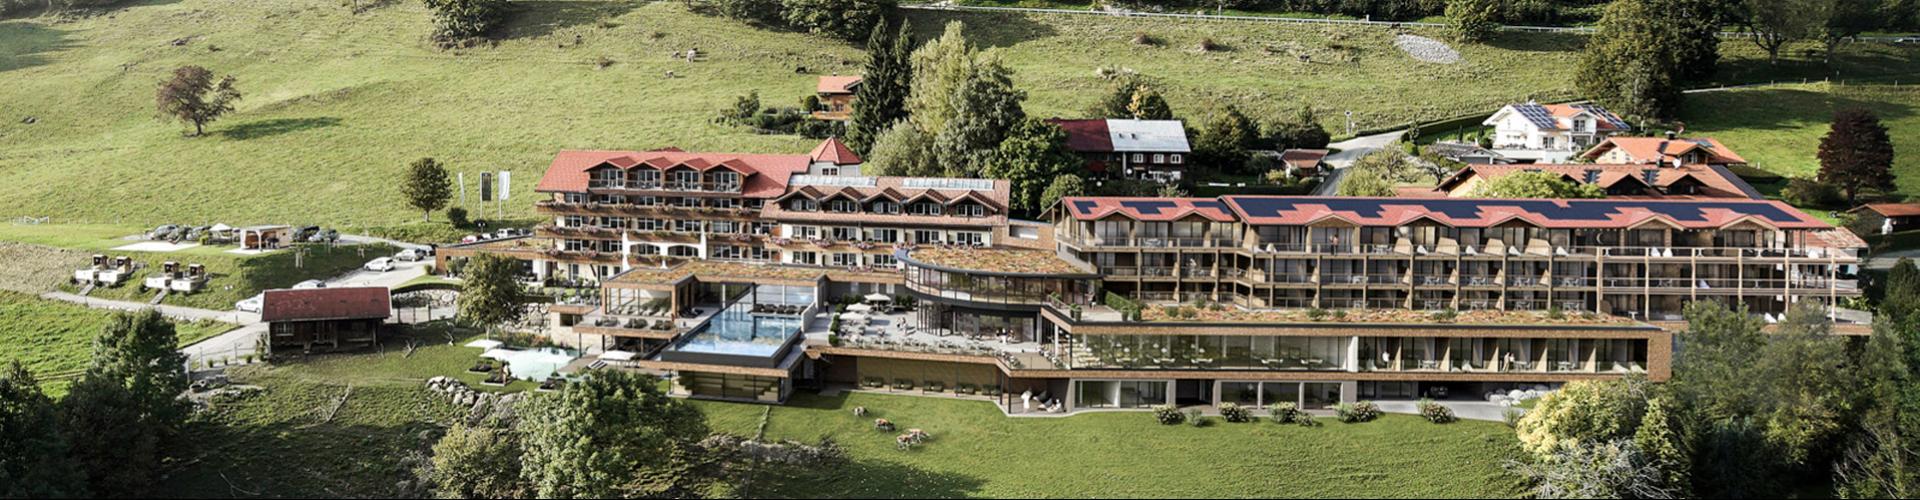 Hotel Bergkristall - Mein Resort im Allgäu cover